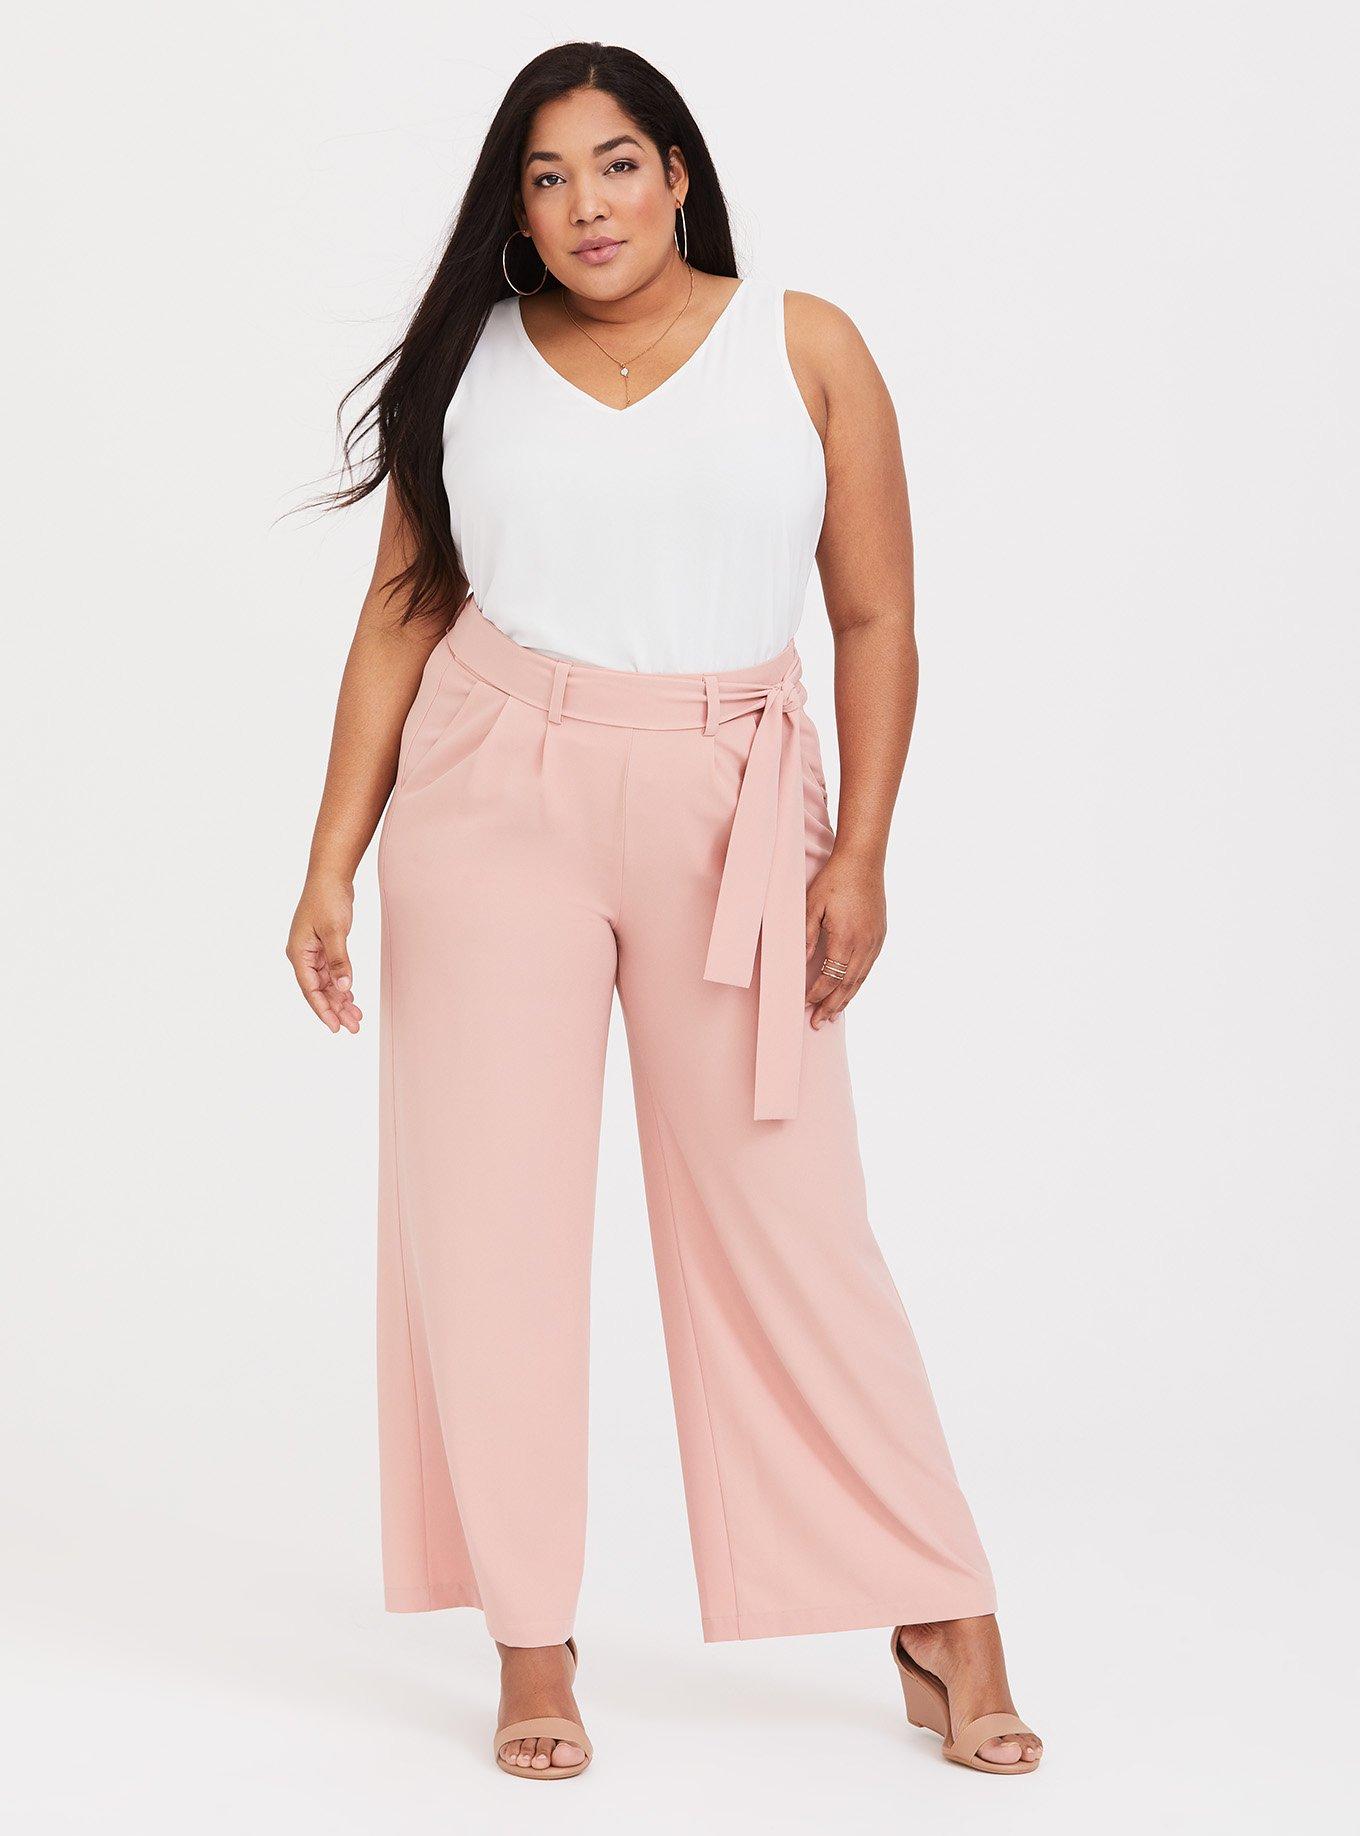 Pink Plus Size Pants for Women - Macy's